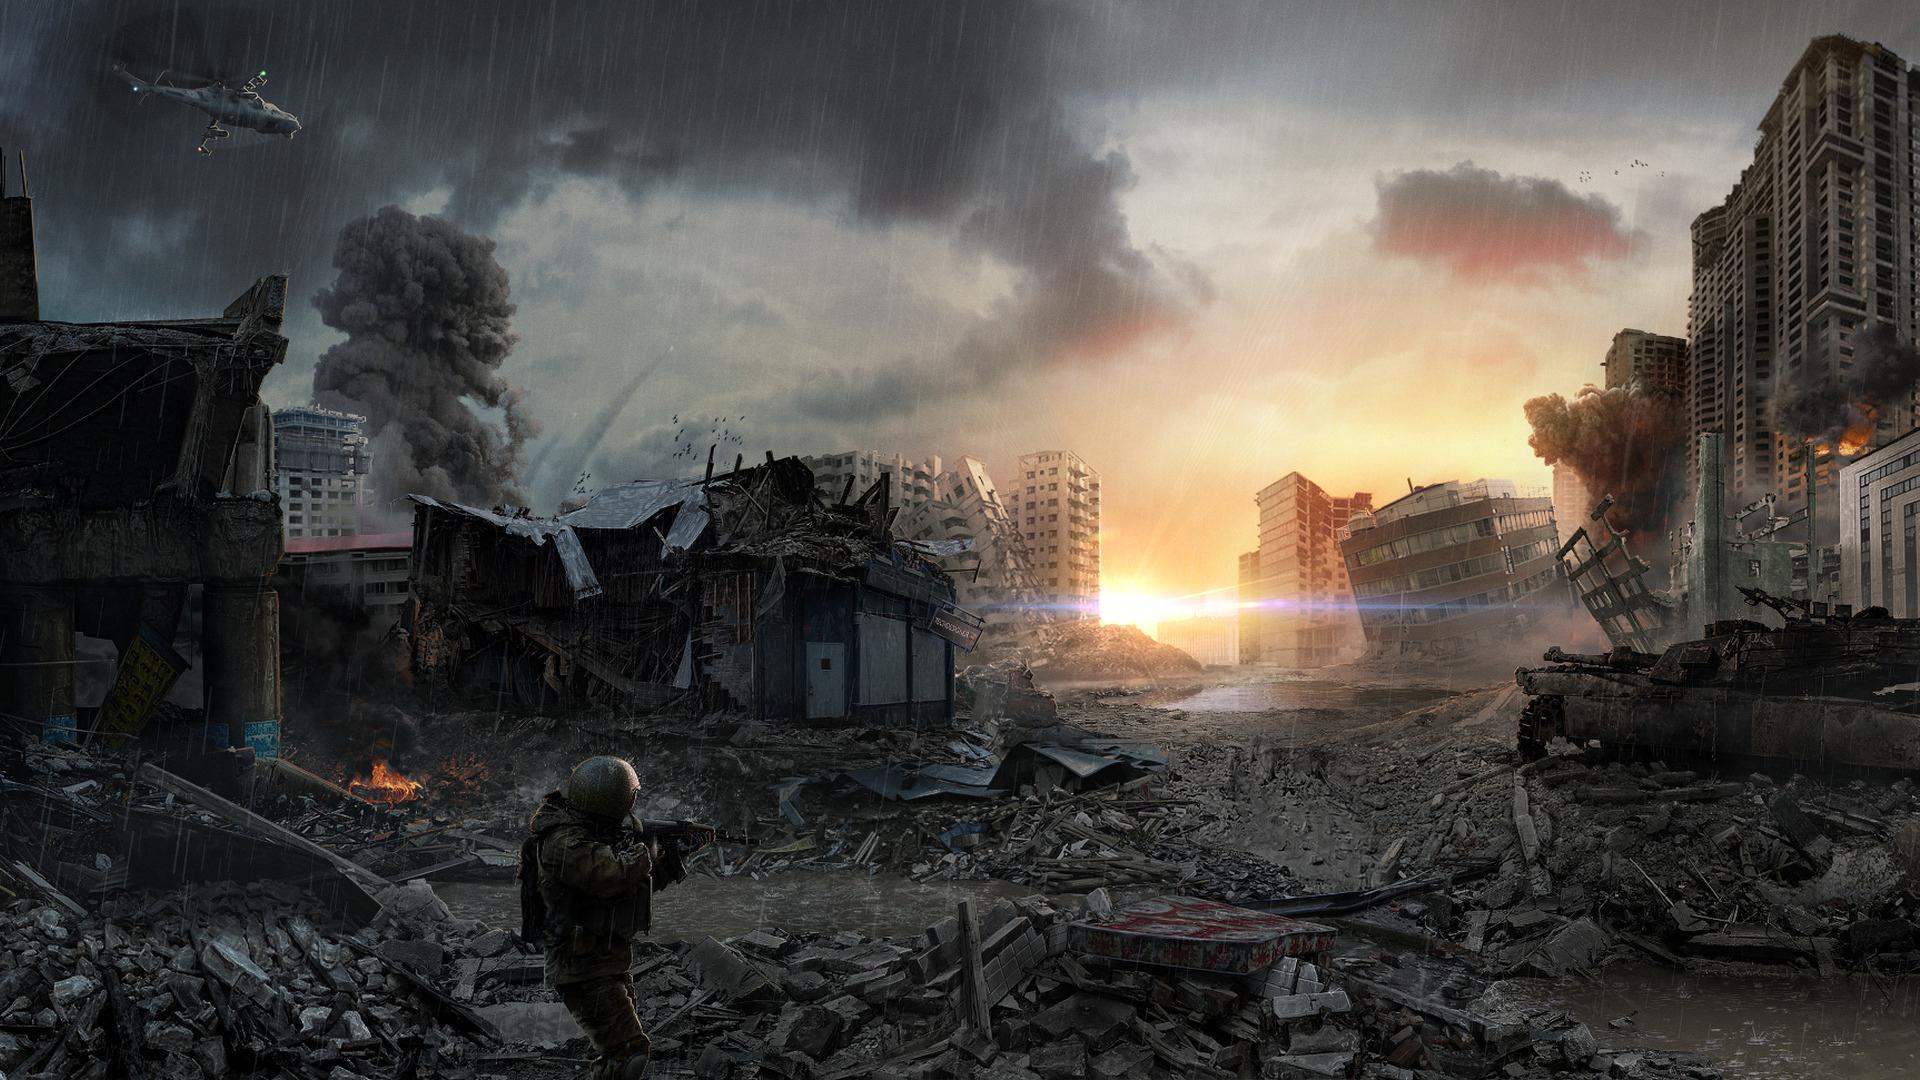 Apocalypse Wallpaper, High Quality Pics of Apocalypse in New